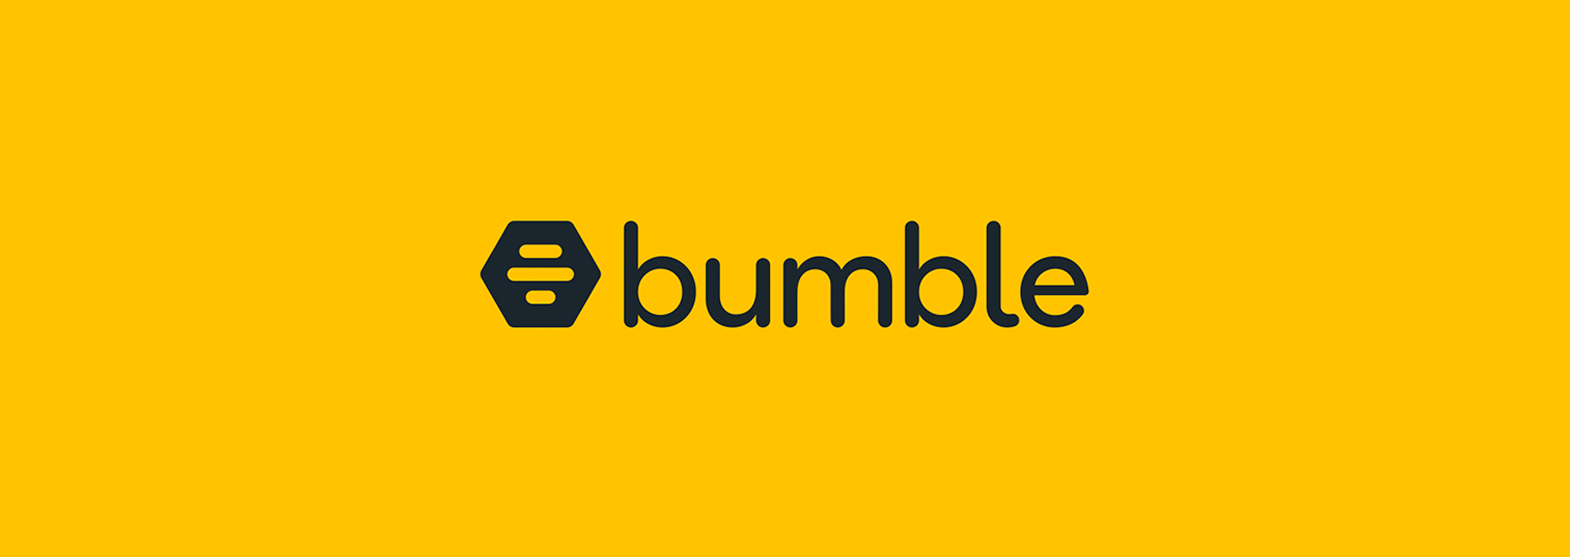 Bumble-date-Thumb